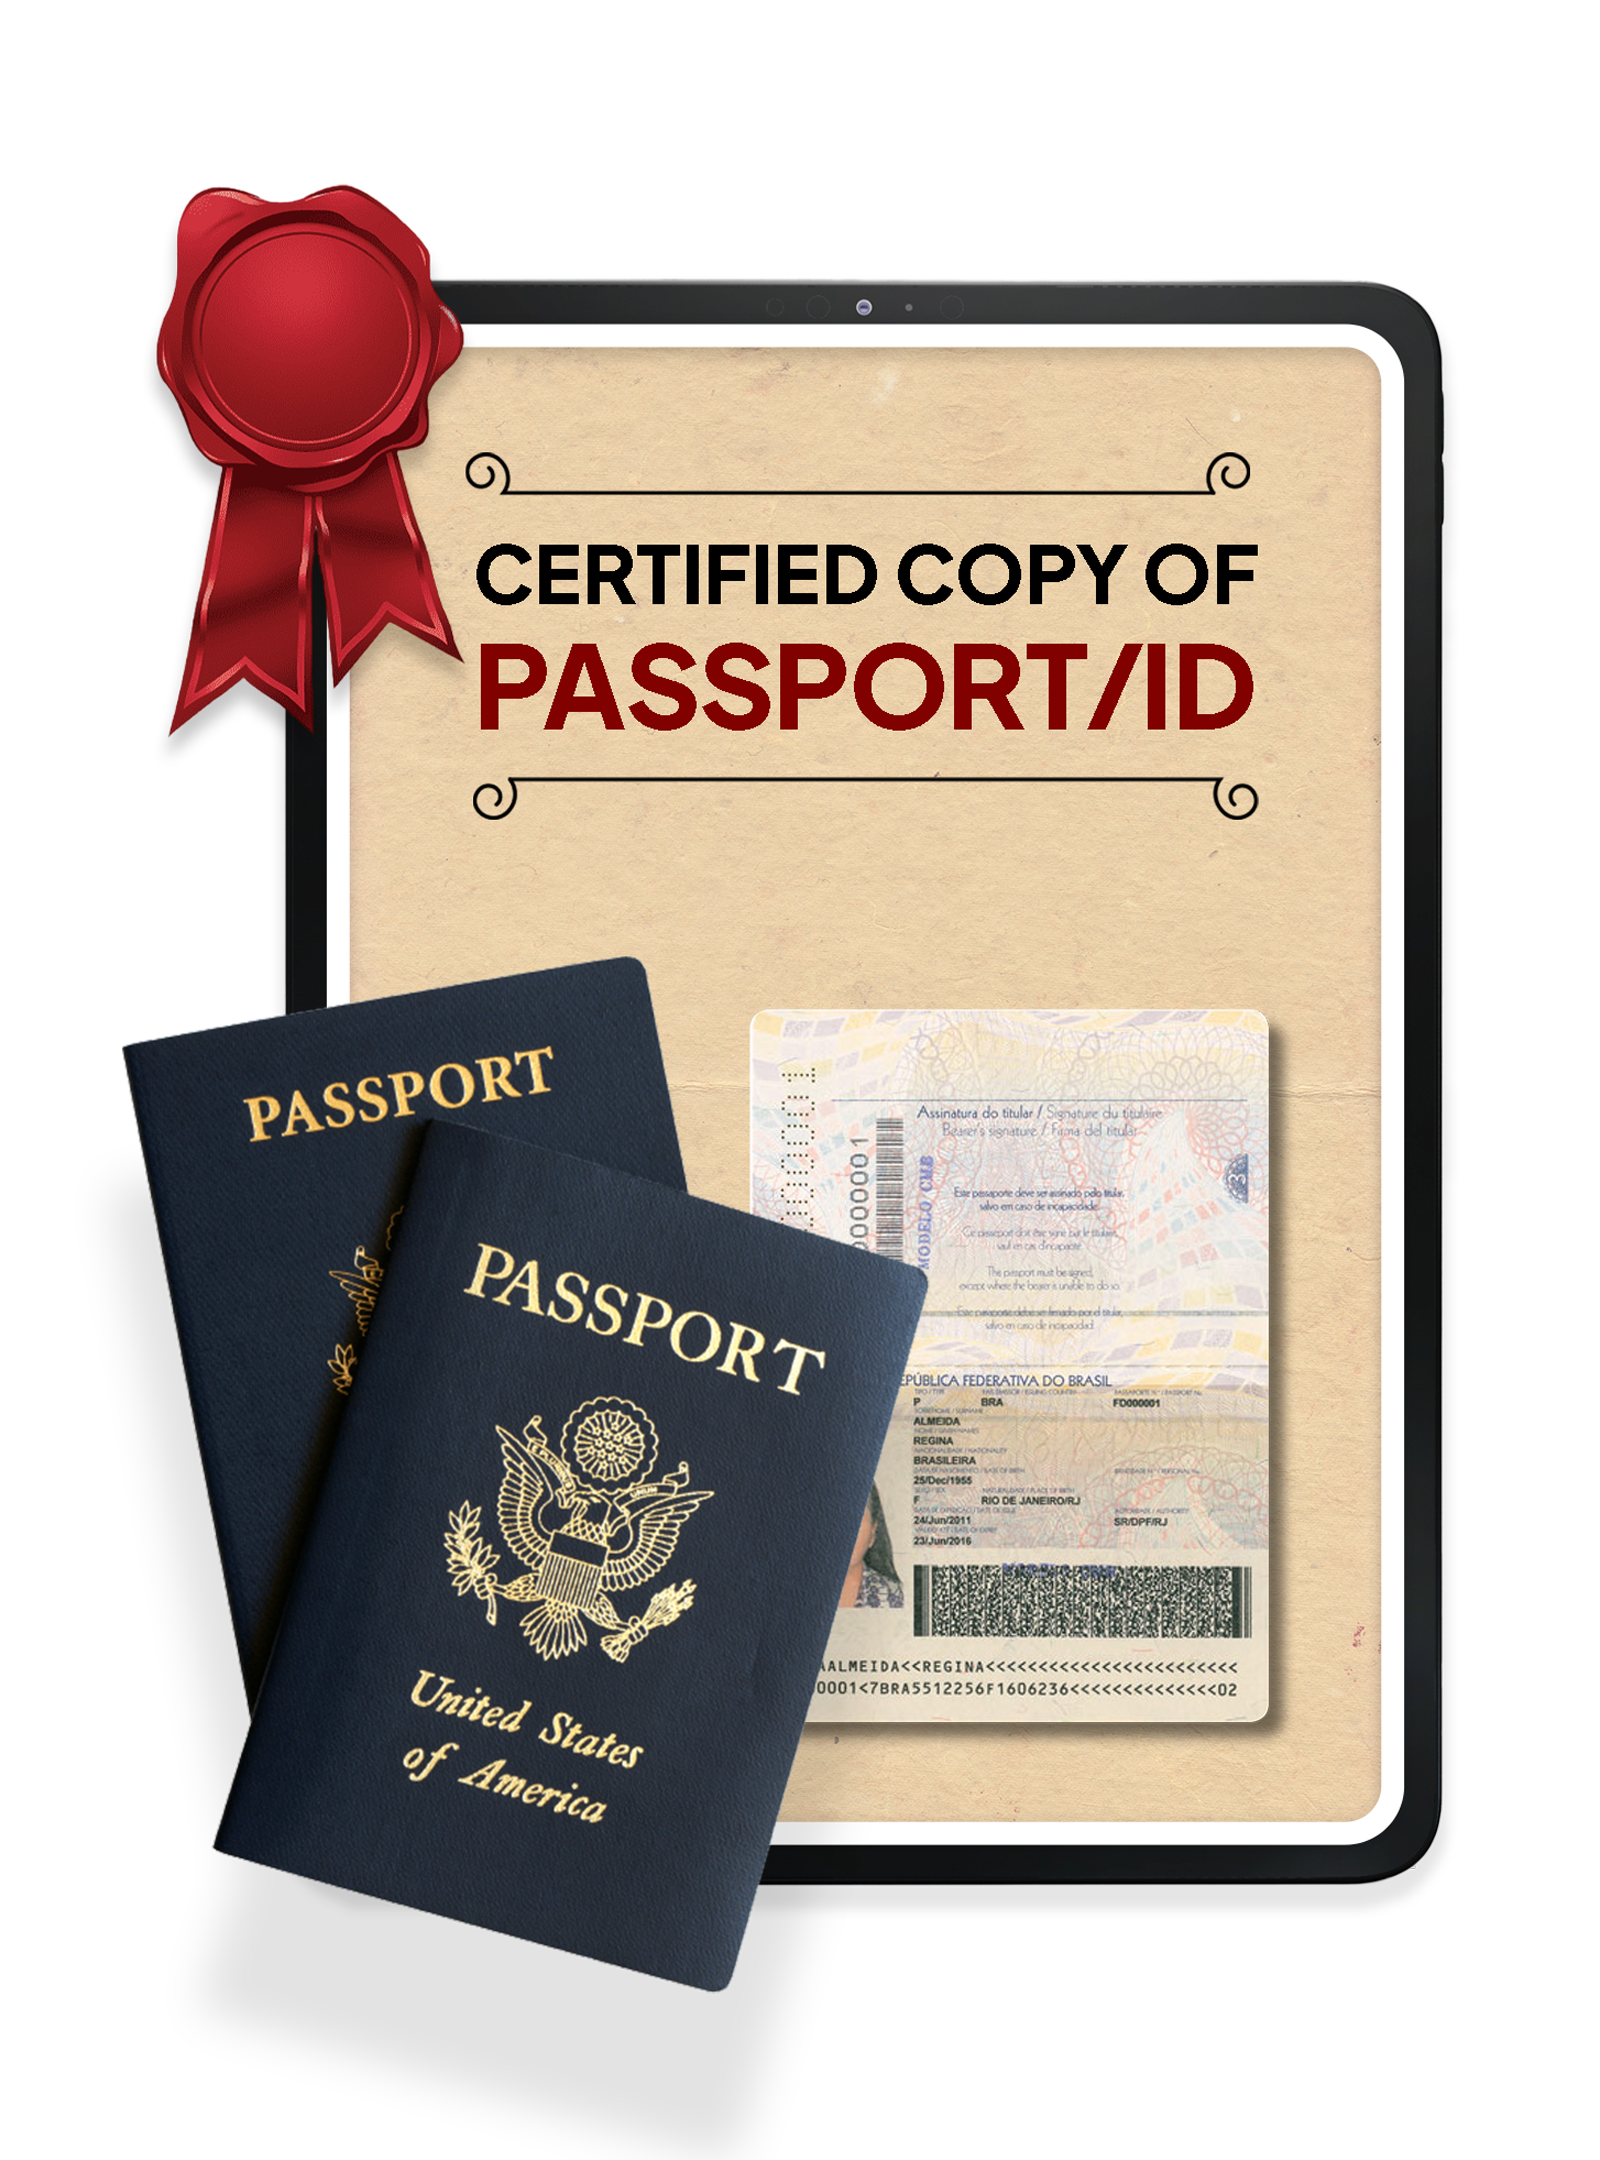 Certified copy of Passport/ID